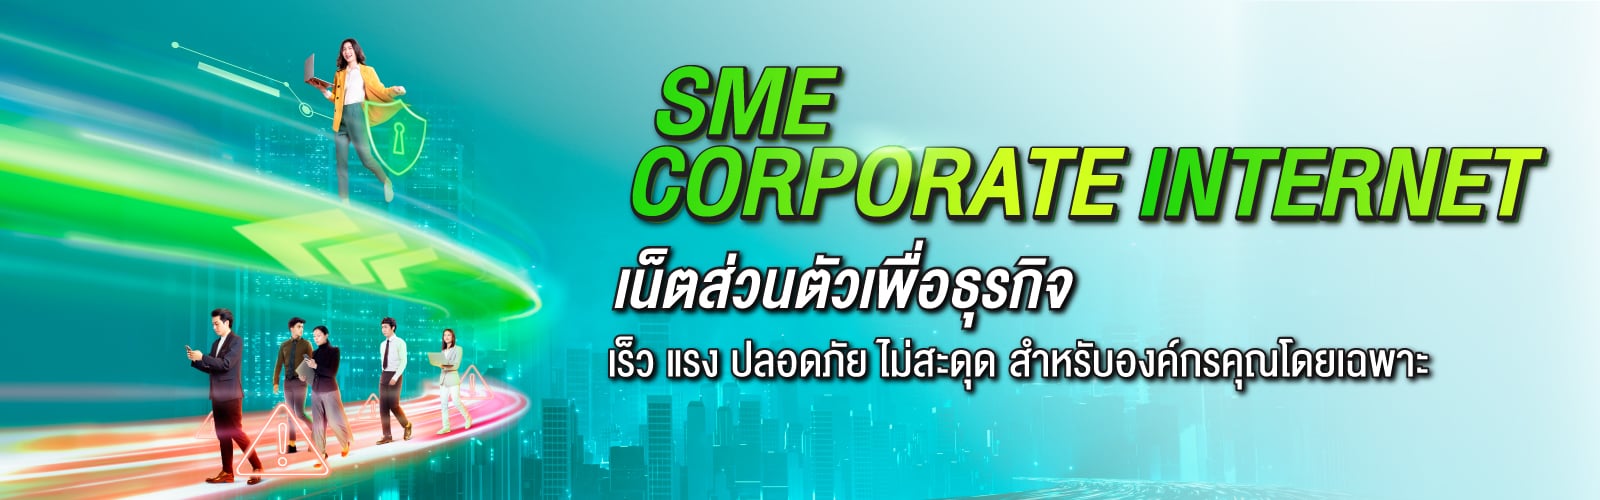 SME Corporate Internet